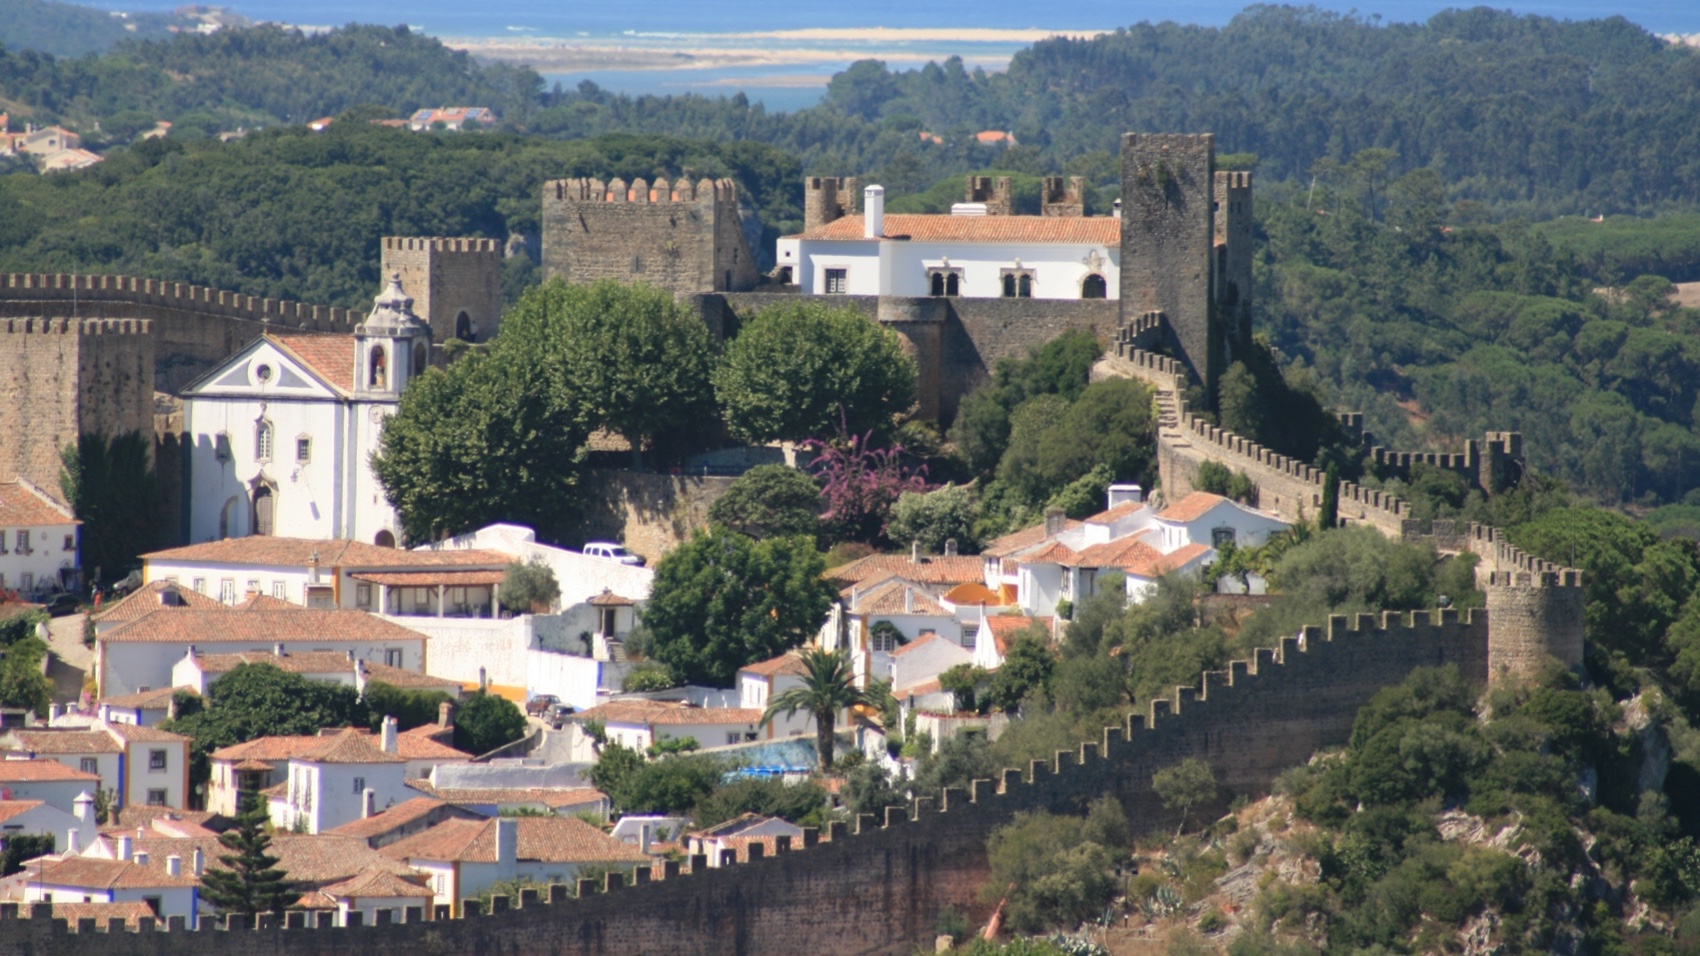 Turismo Centro de Portugal - Alcobaca Batalha Monasteries with Obidos view castle